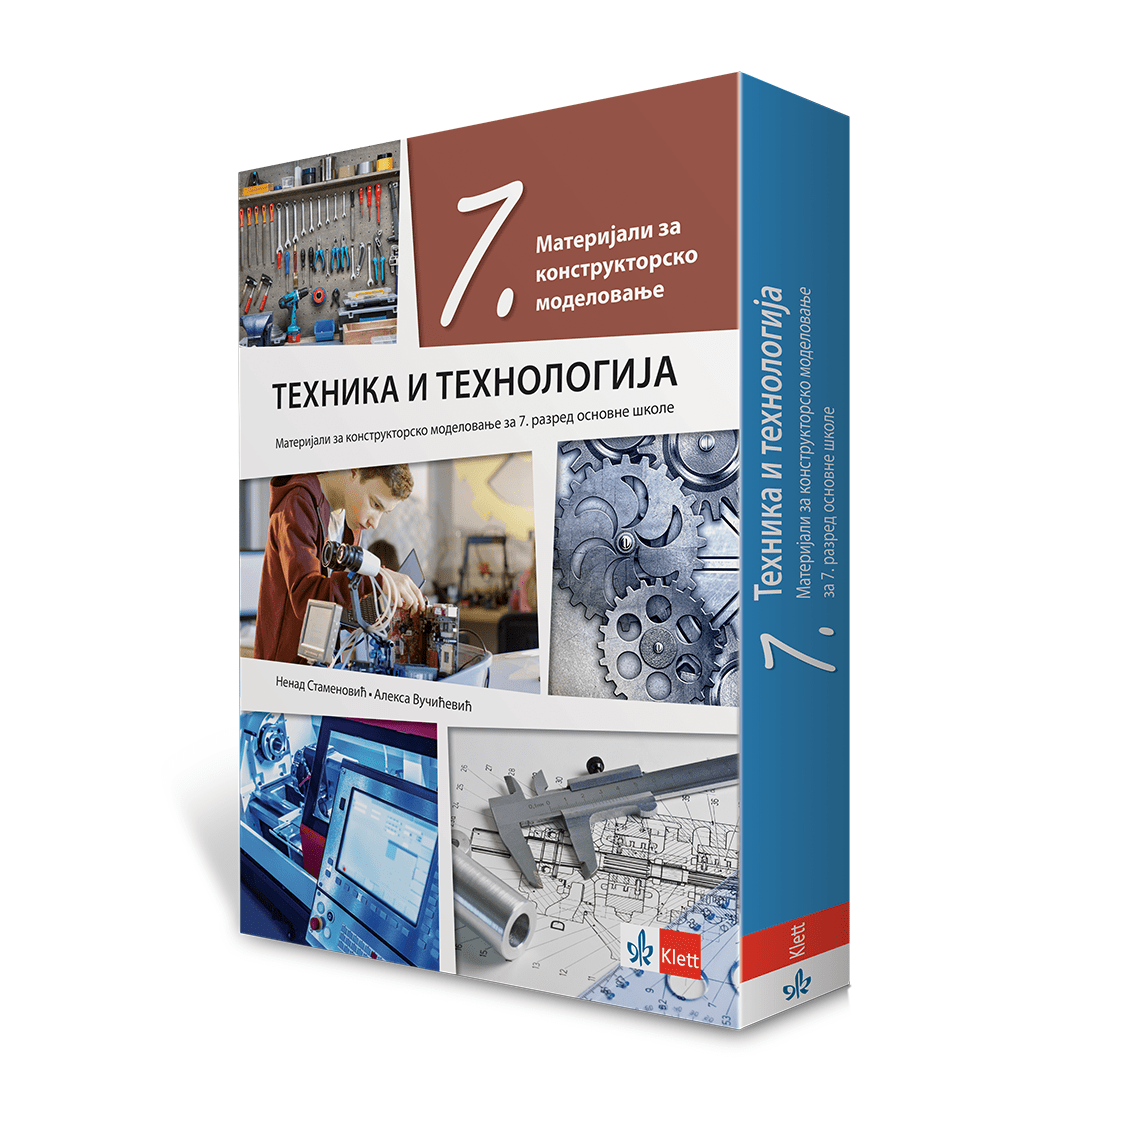 Техника и технологија 7, материјали за конструкторско моделовање